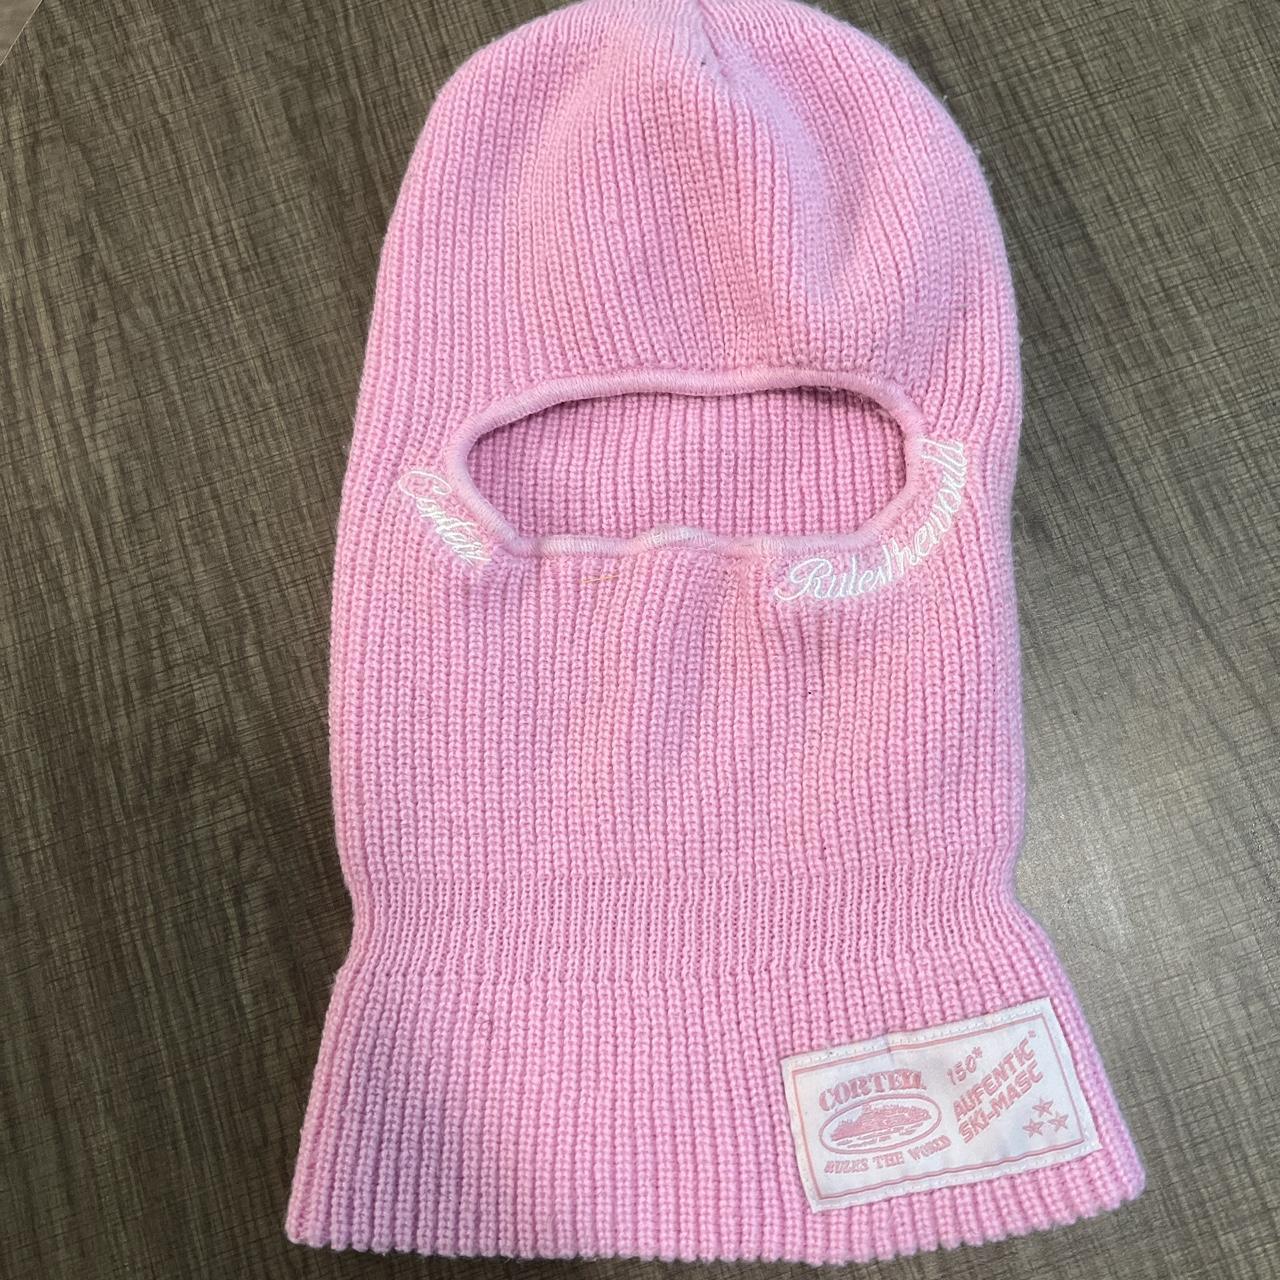 Corteiz Ski Mask in pink, rare good for winter brand...